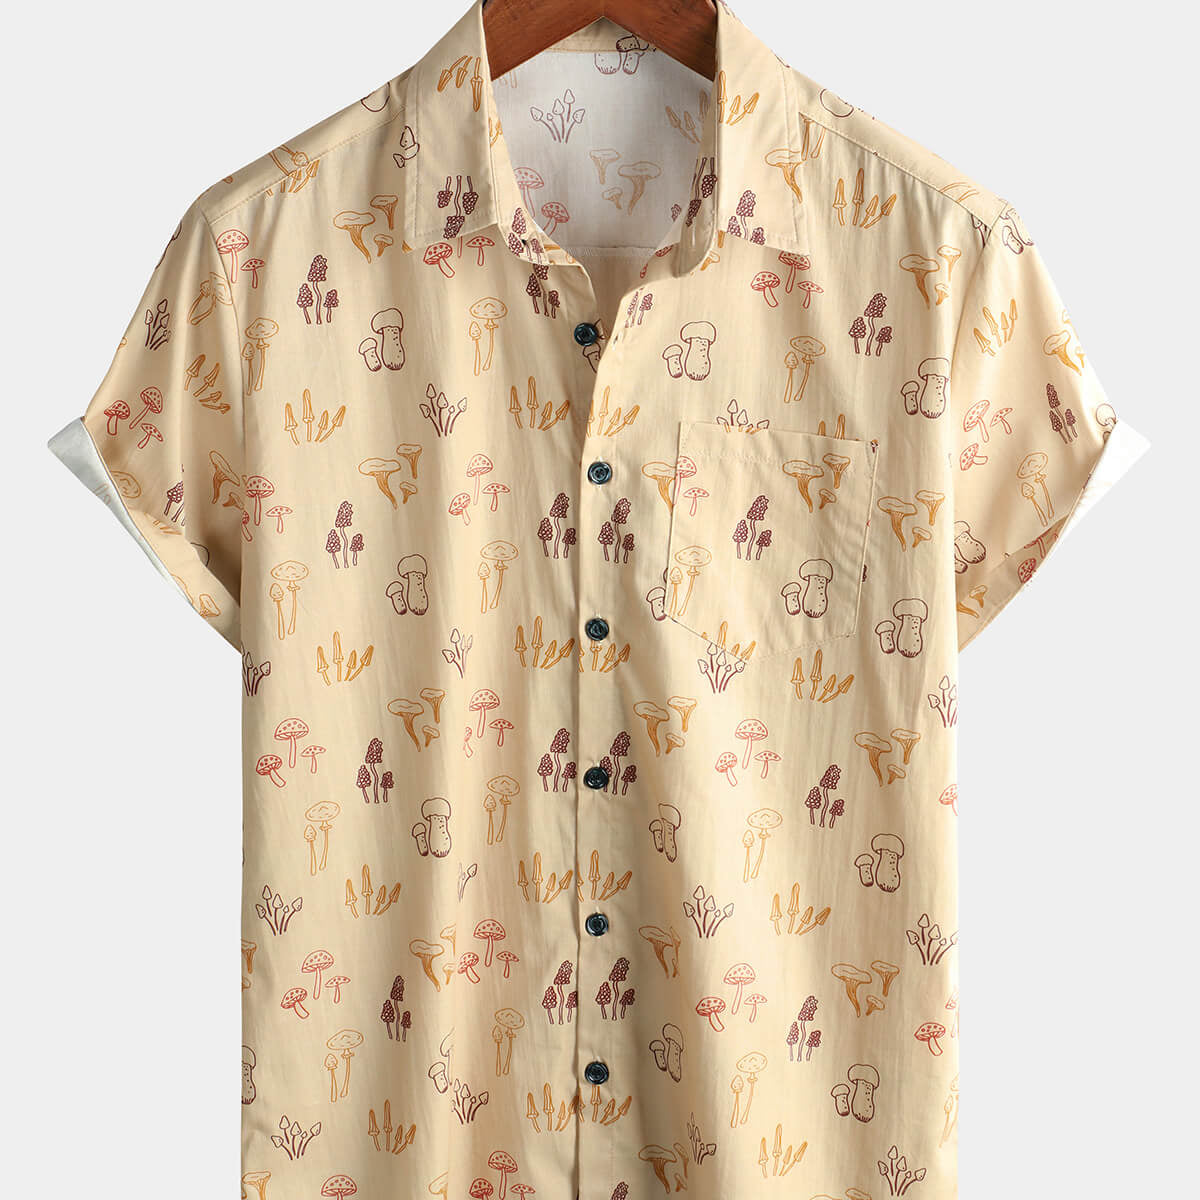 Men's Vintage Holiday Beach Short Sleeve Shirt